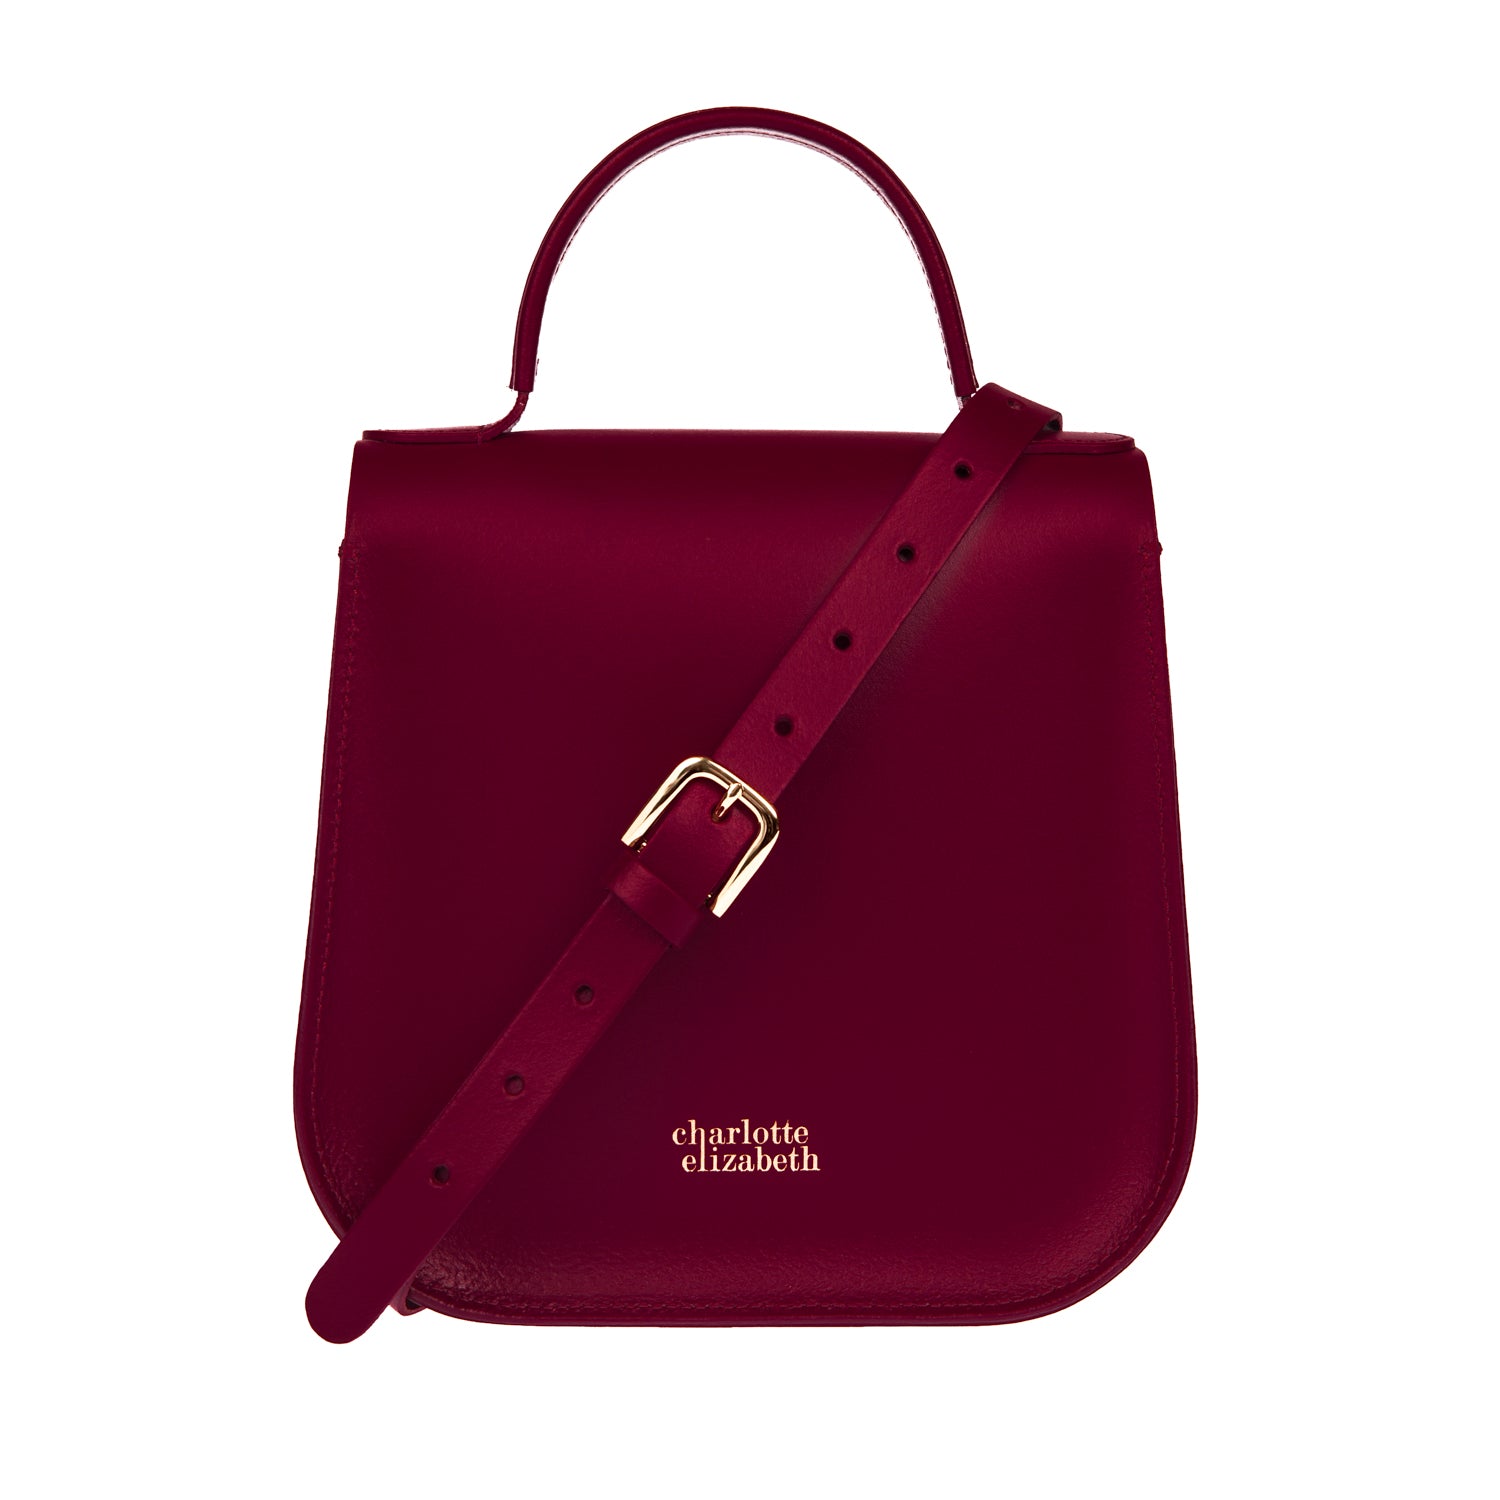 Meghan Markle's Charlotte Elizabeth Bloomsbury Bag